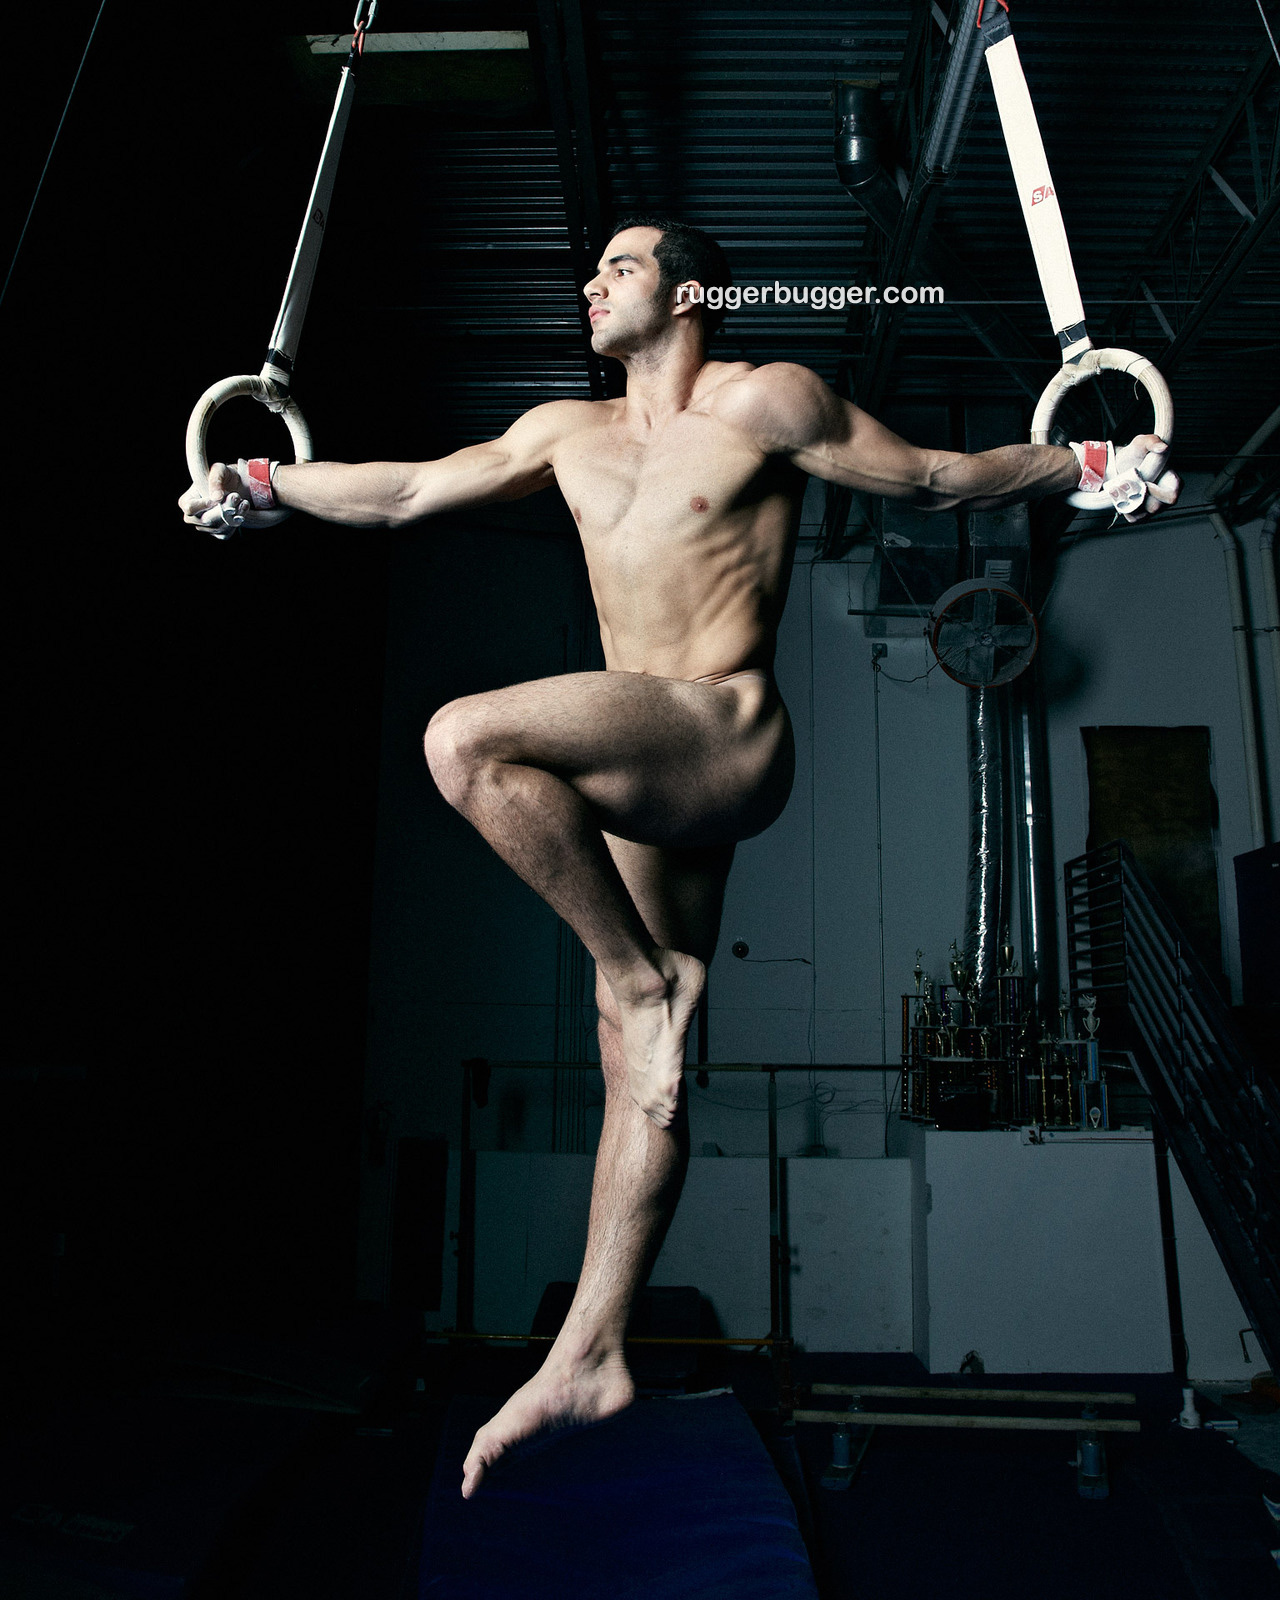 Ruggerbugger have amazing photos of Cuban-American gymnast Danell Leyva nak...